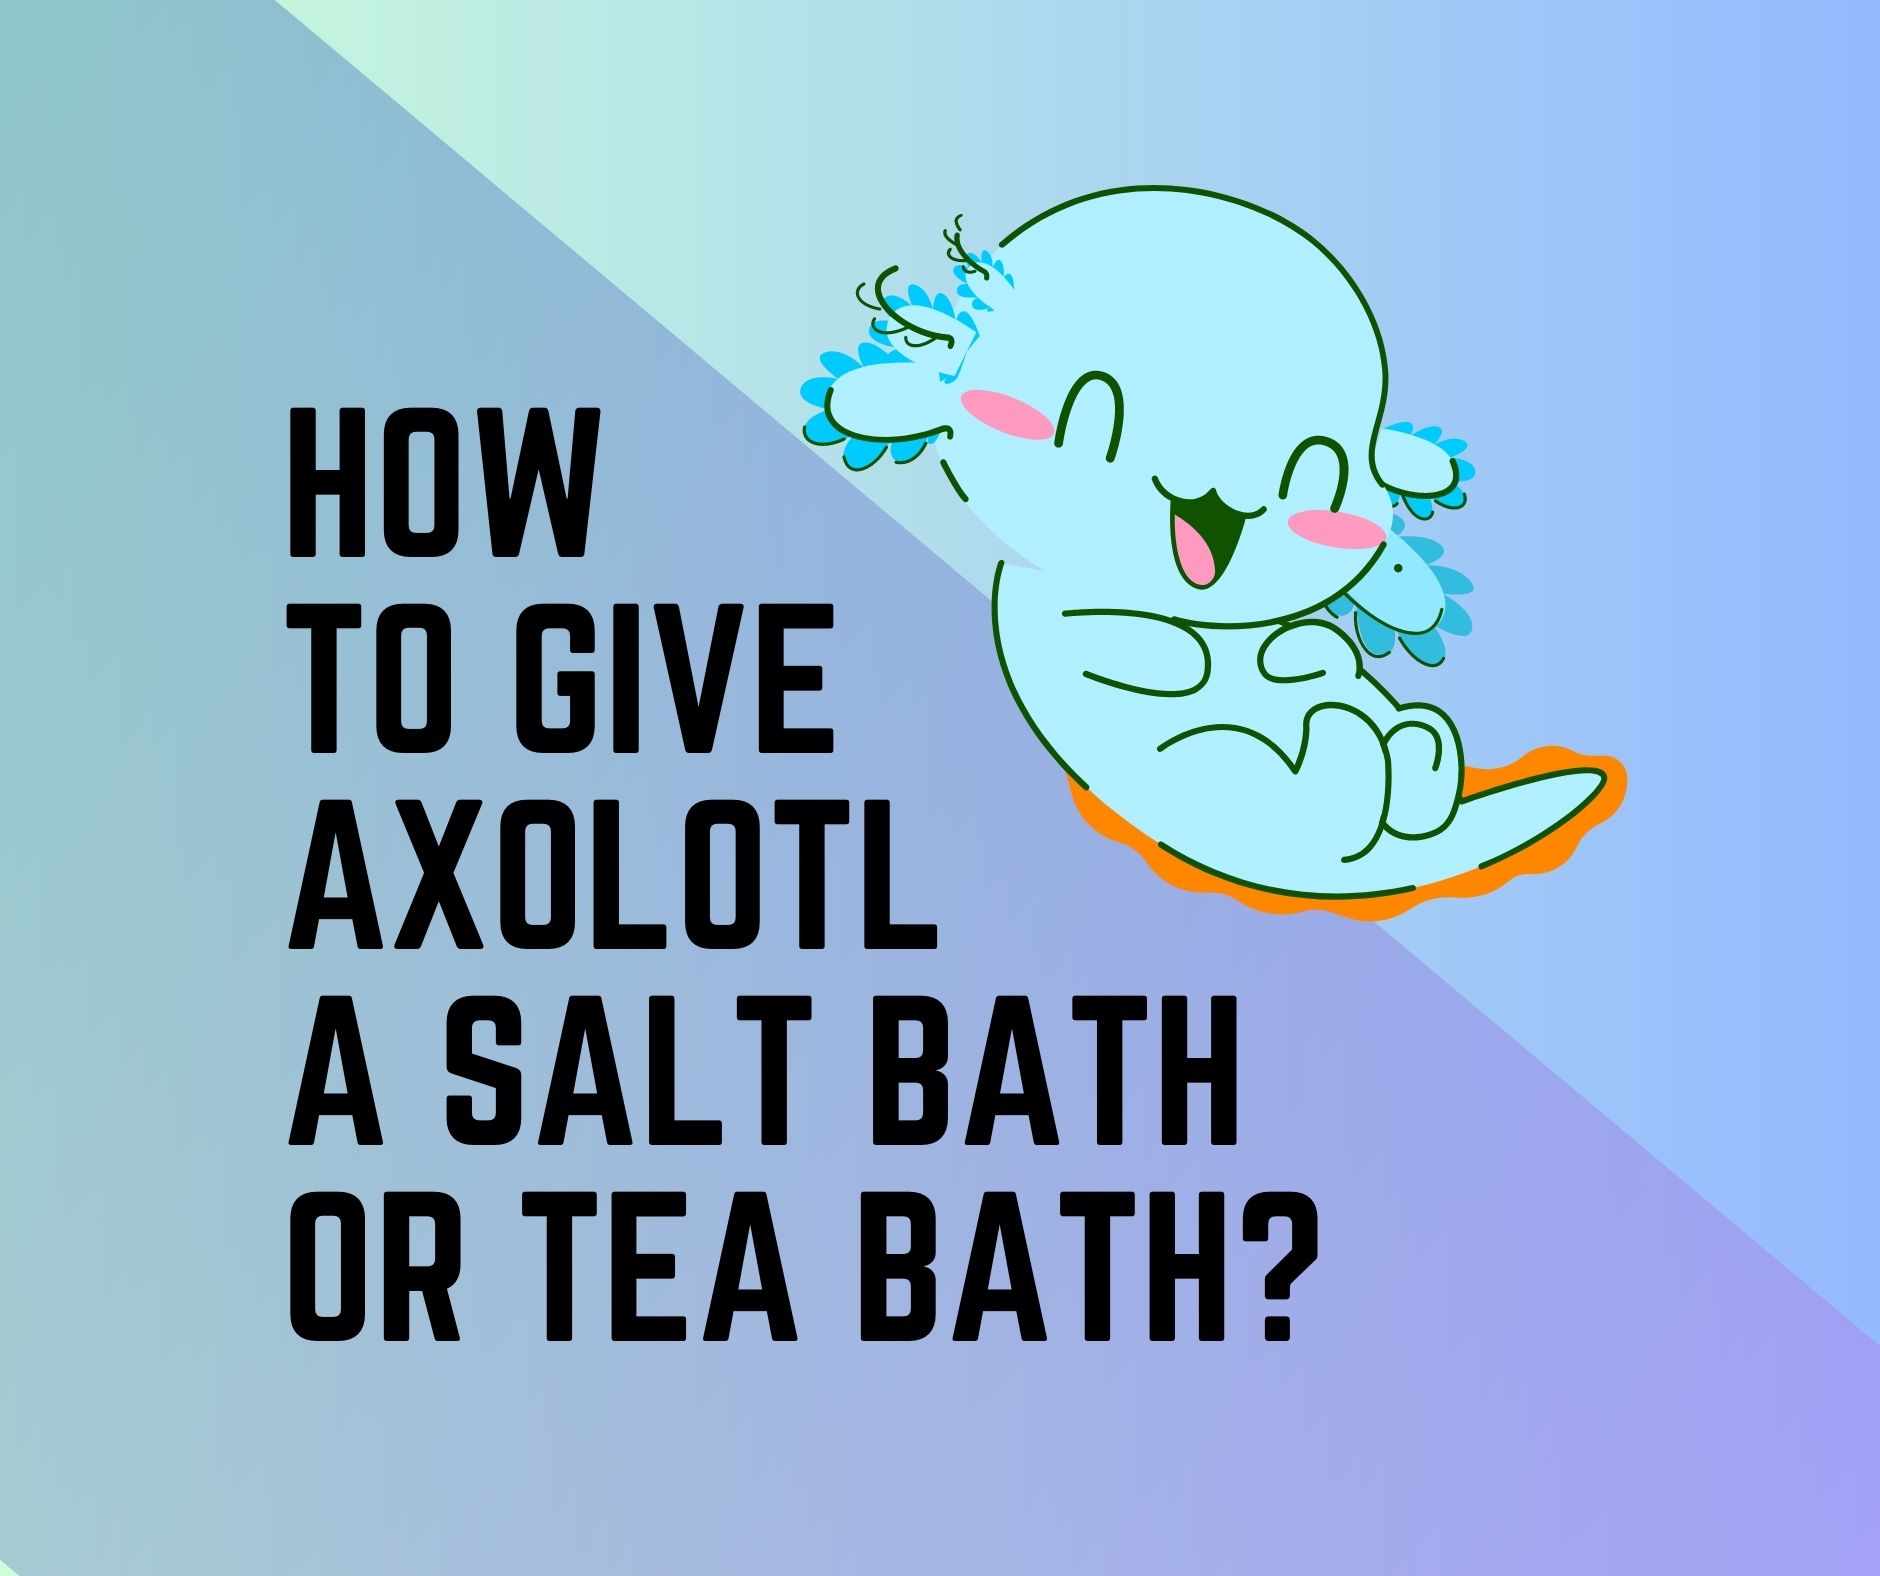 Giving A salt bath for Axolotl